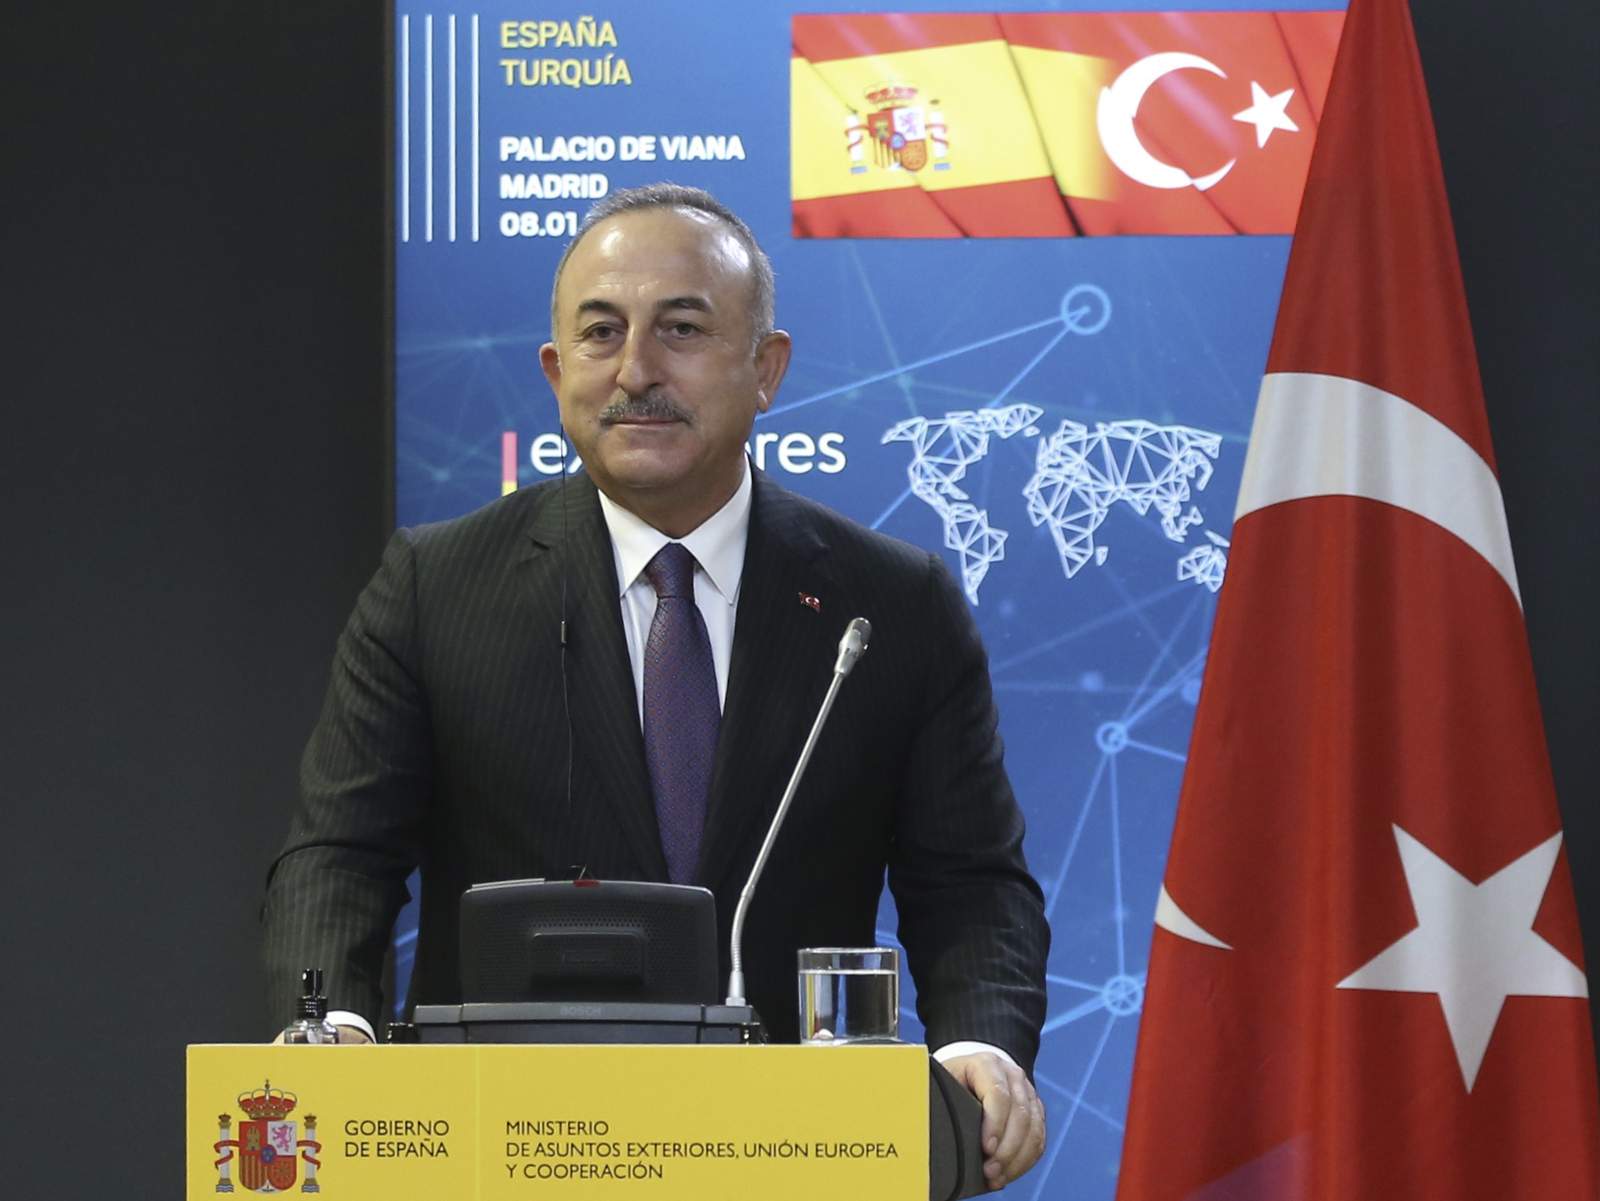 Turkey invites rival Greece to resume talks on disputes